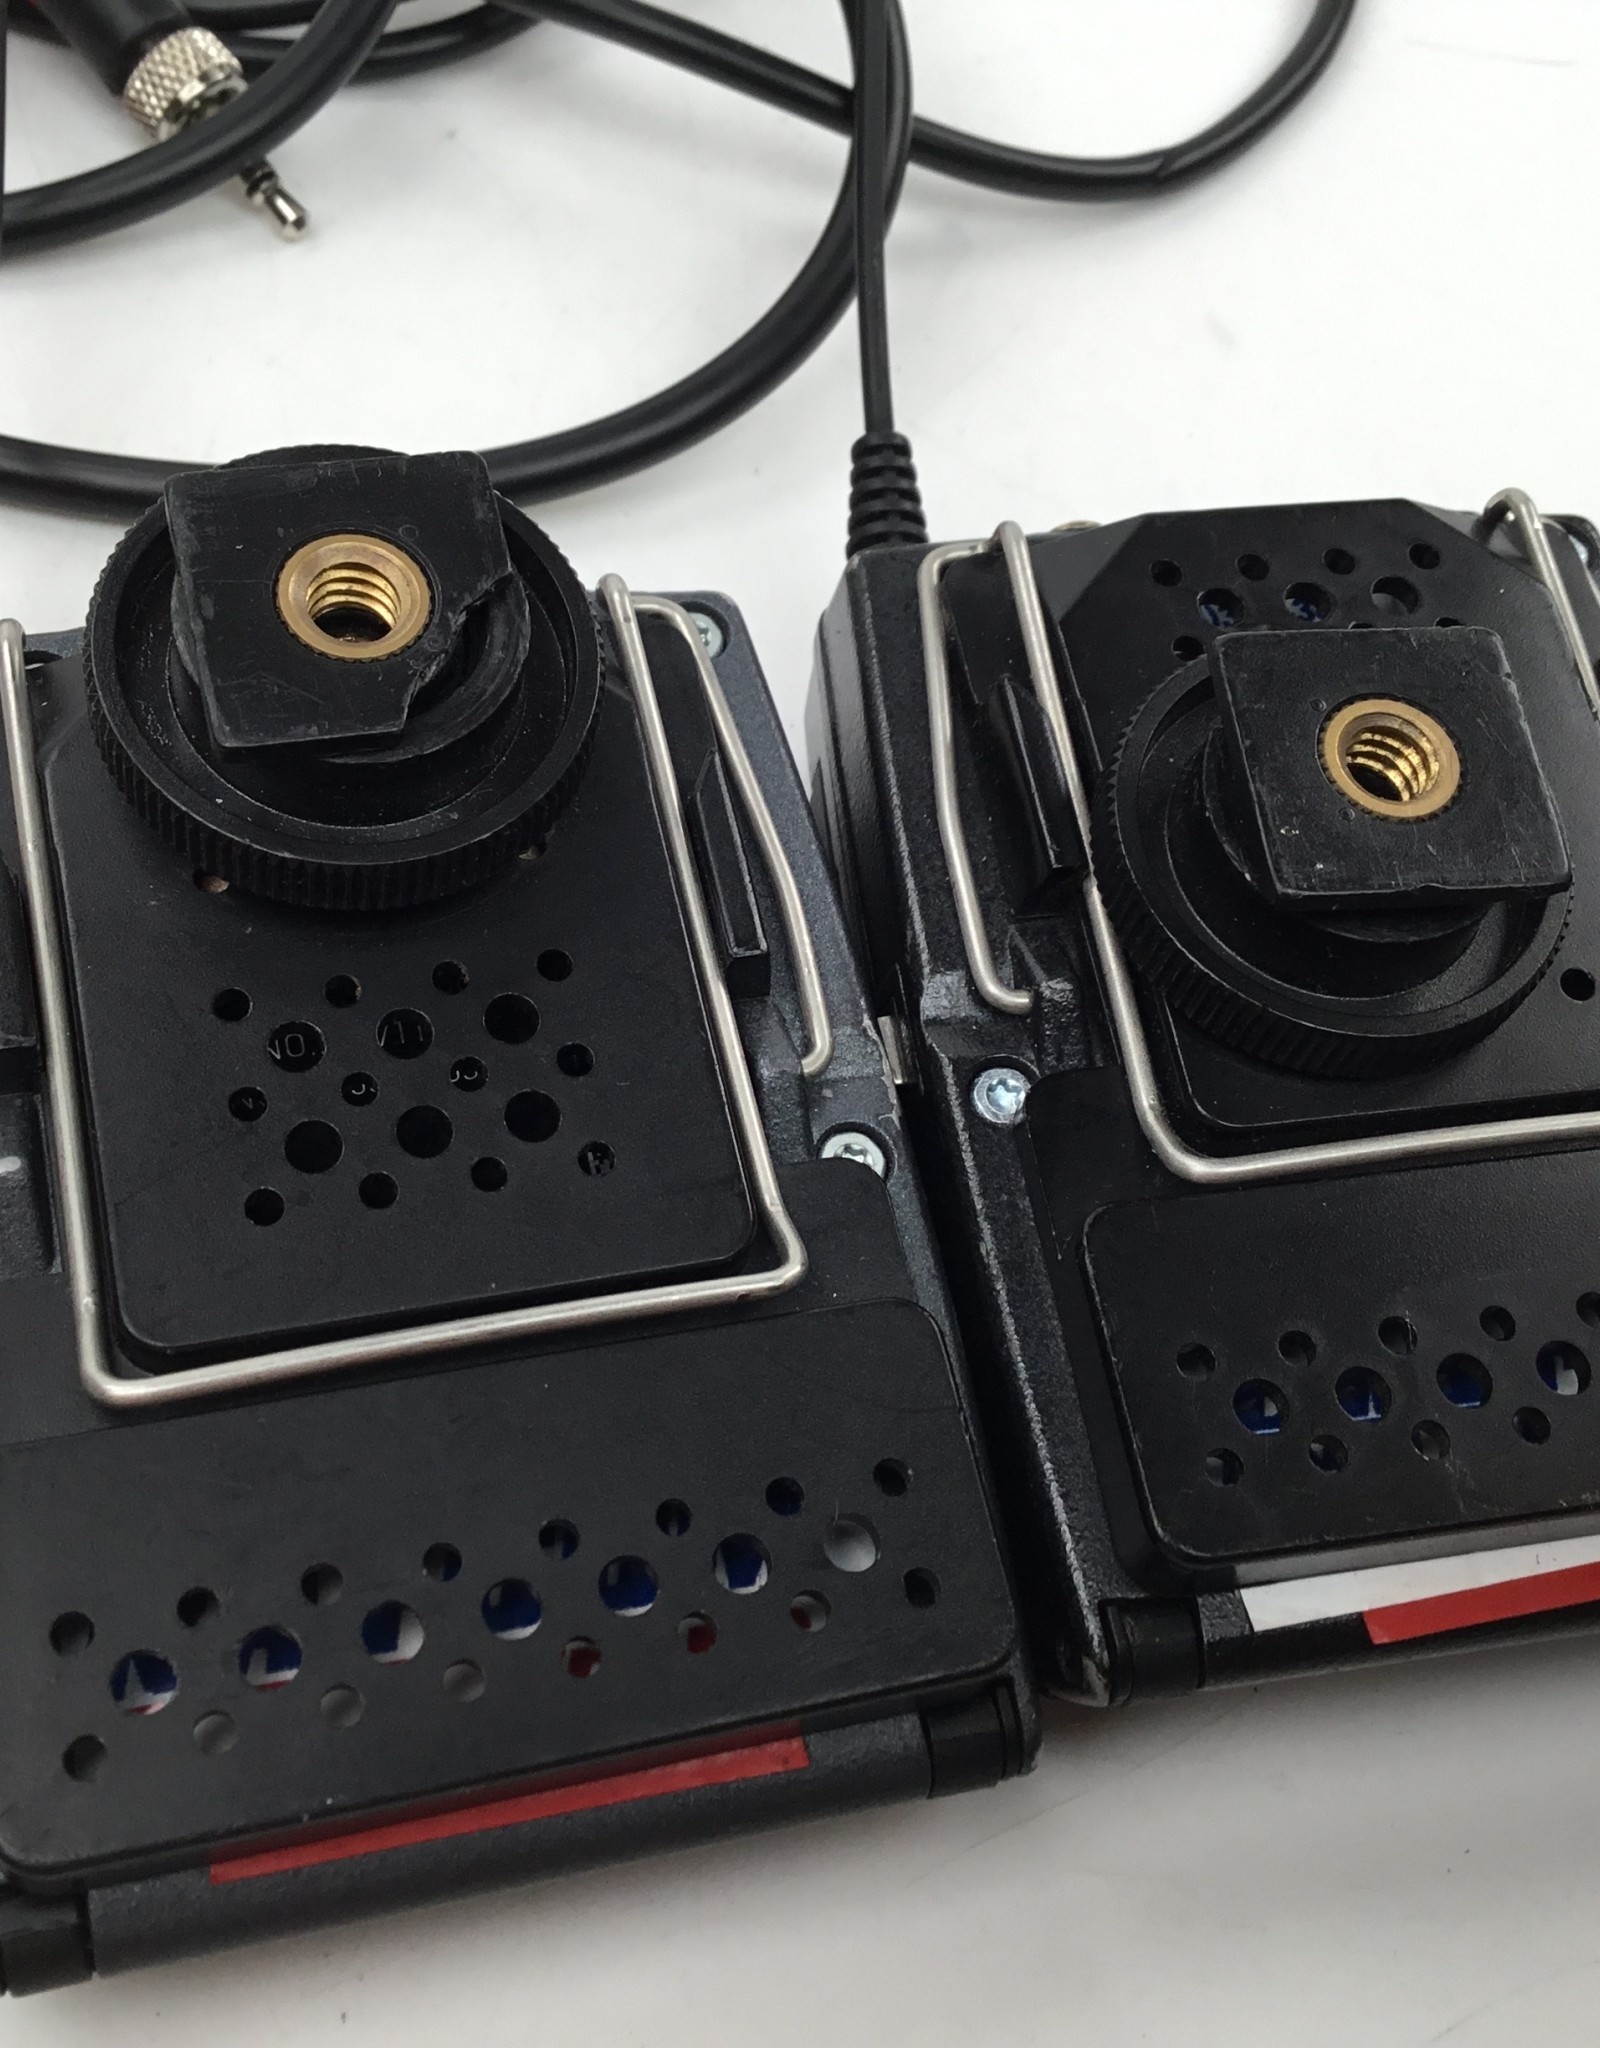 SENNHEISER Sennheiser EW100 G3 Wiress Kit 2 Receivers, 2 Transmitters 1 Plug on Used Fair